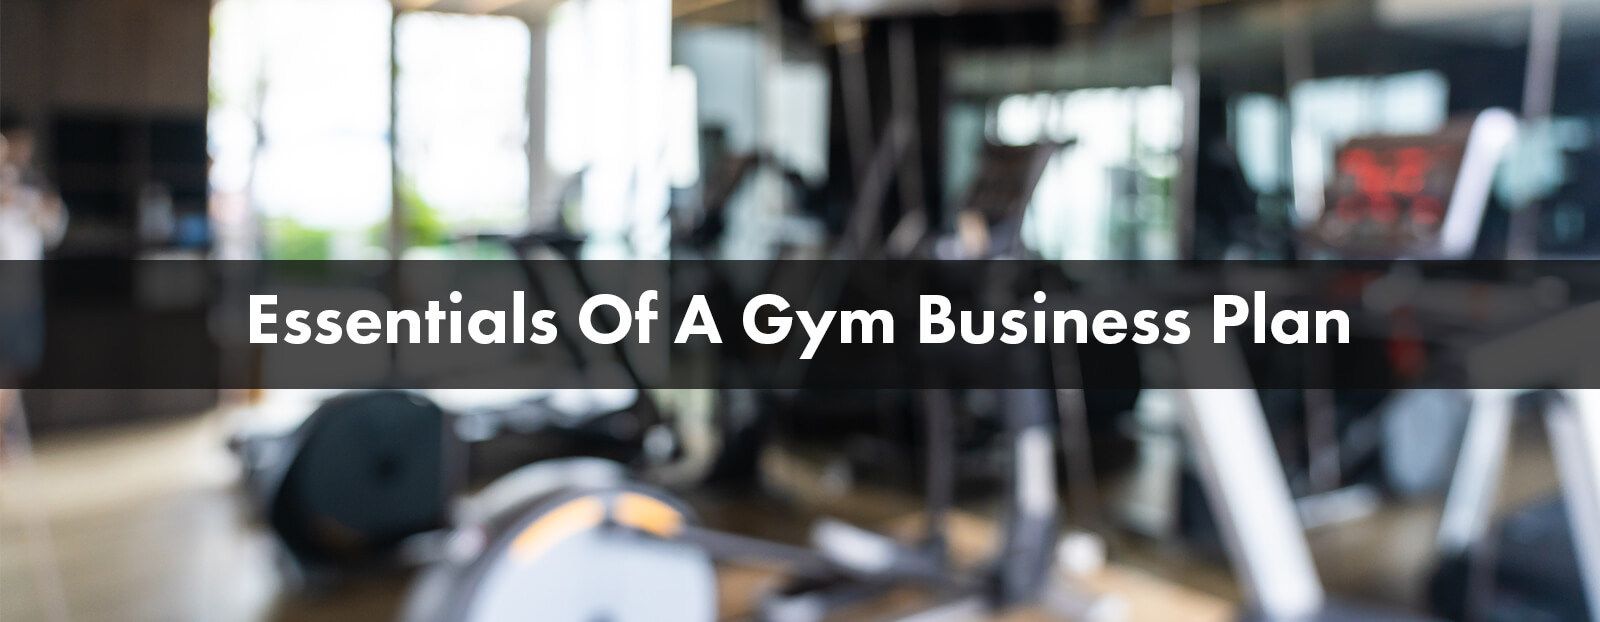 Essentials Of A Gym Business Plan